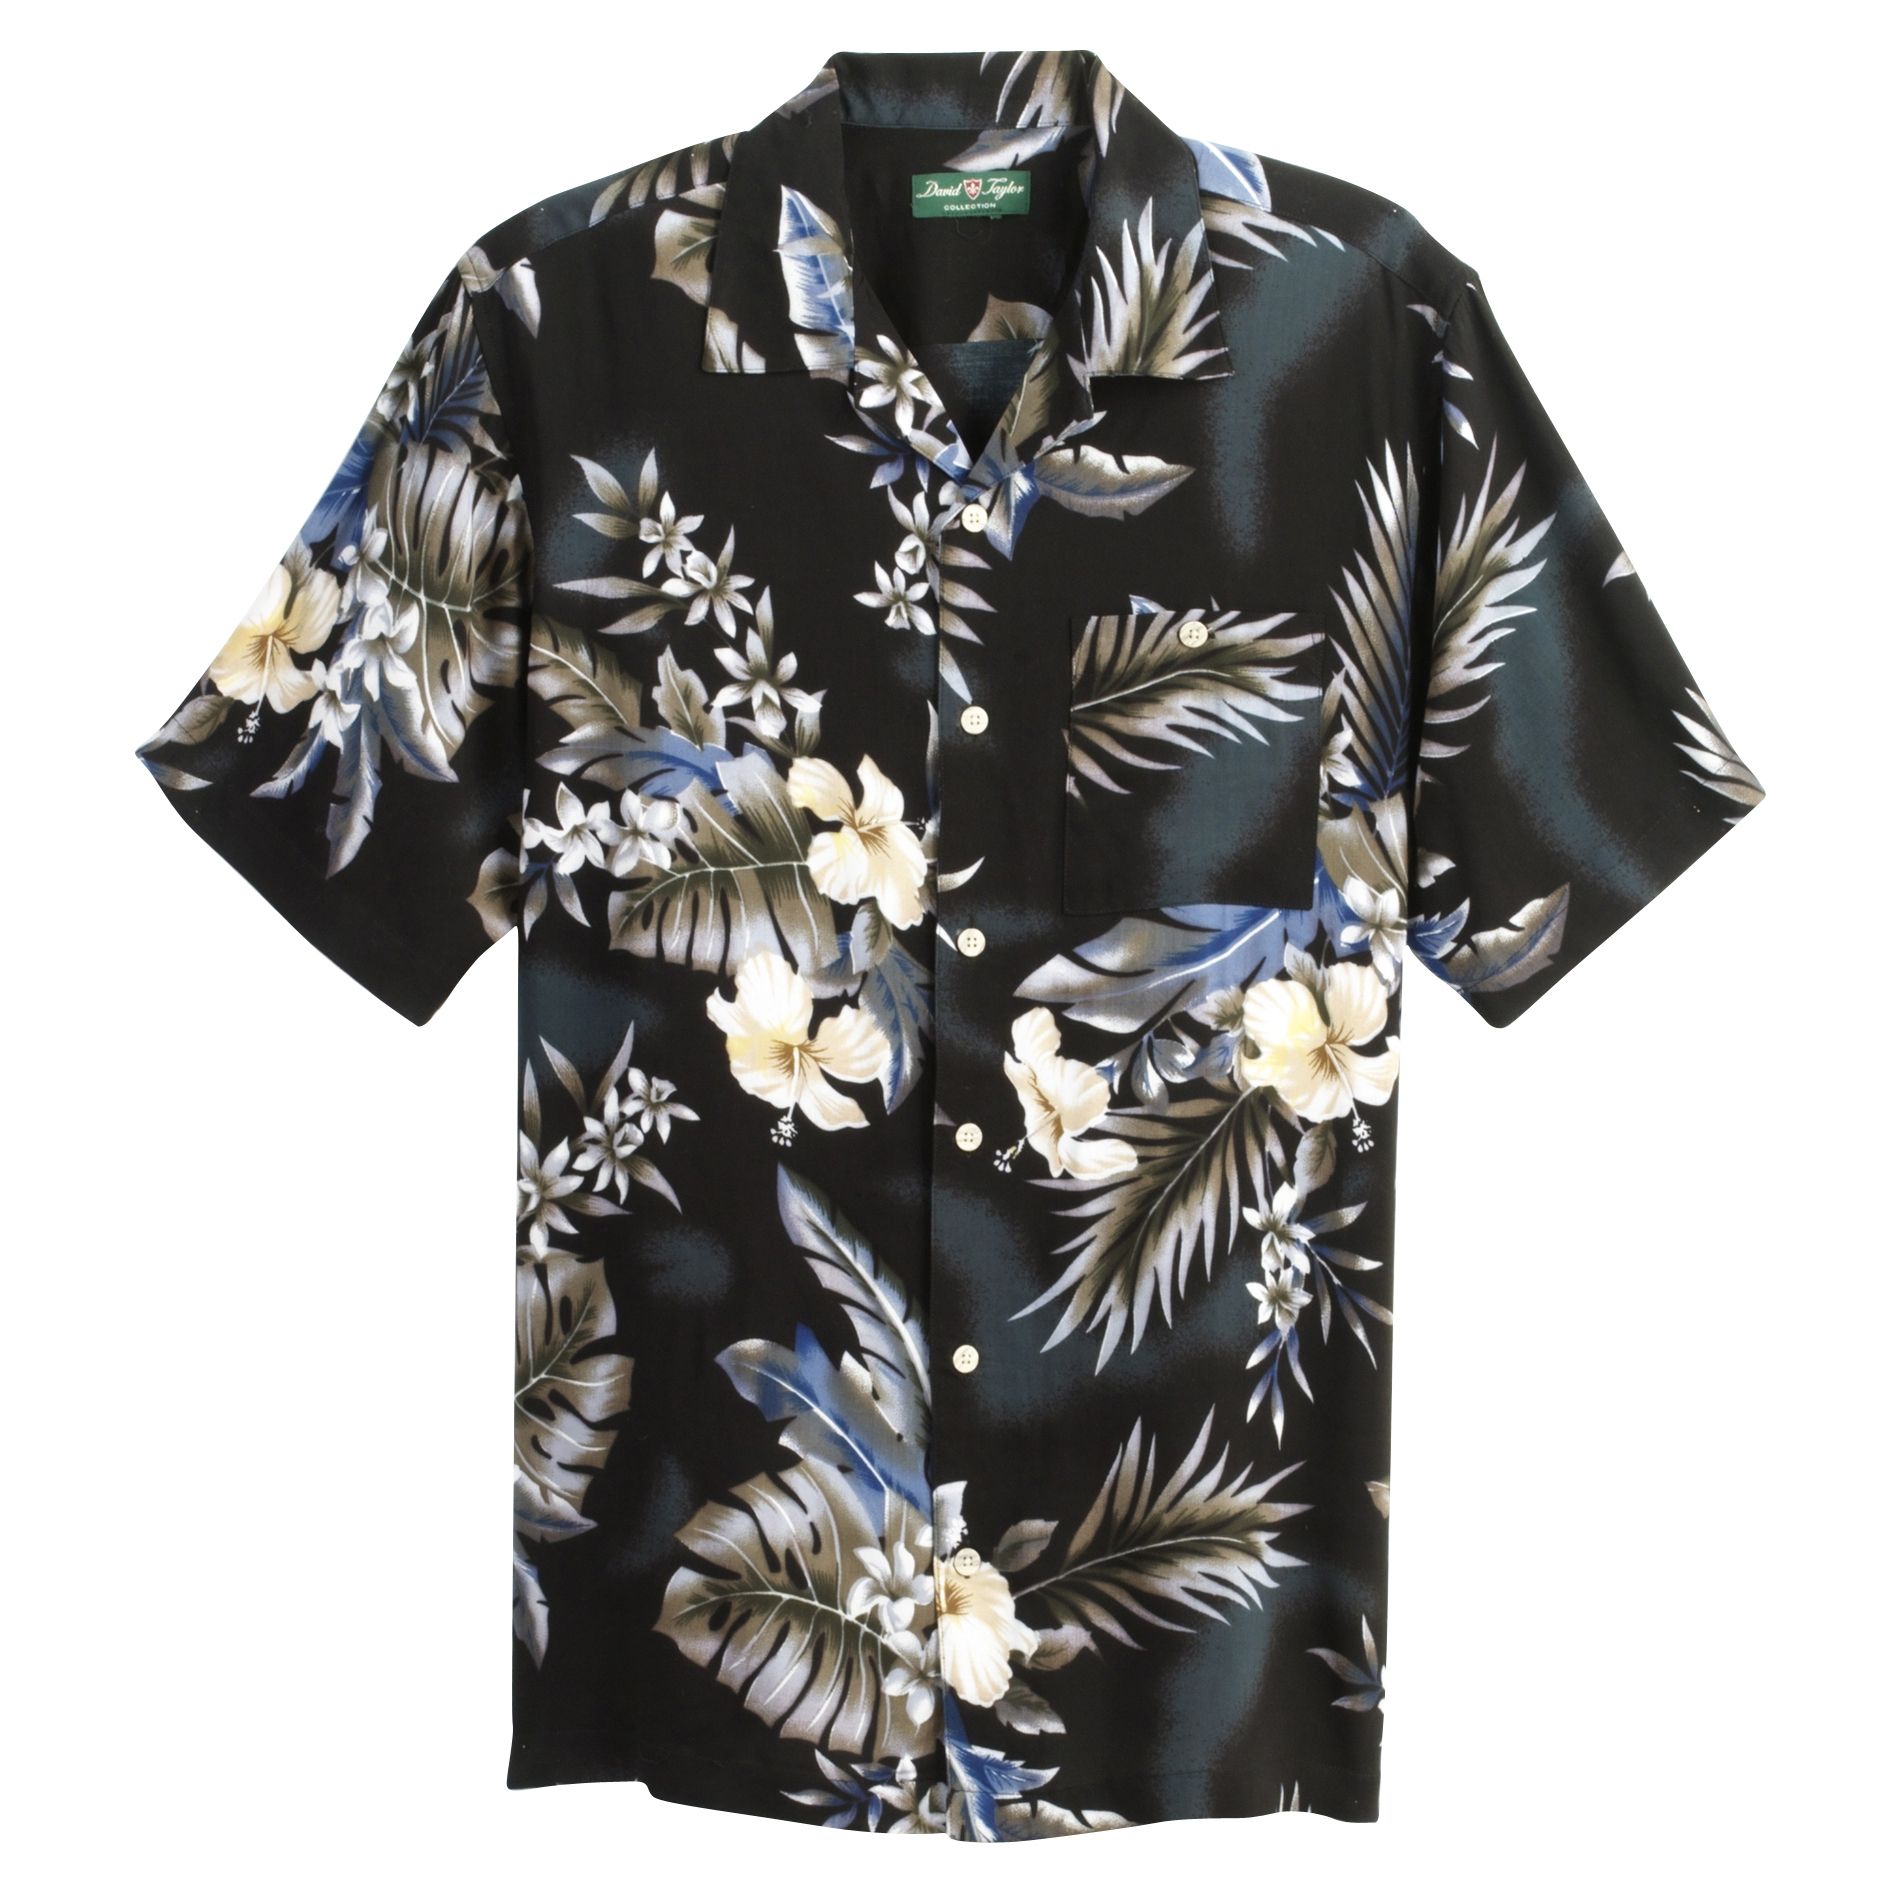 Men's Floral Print Button Up Shirt